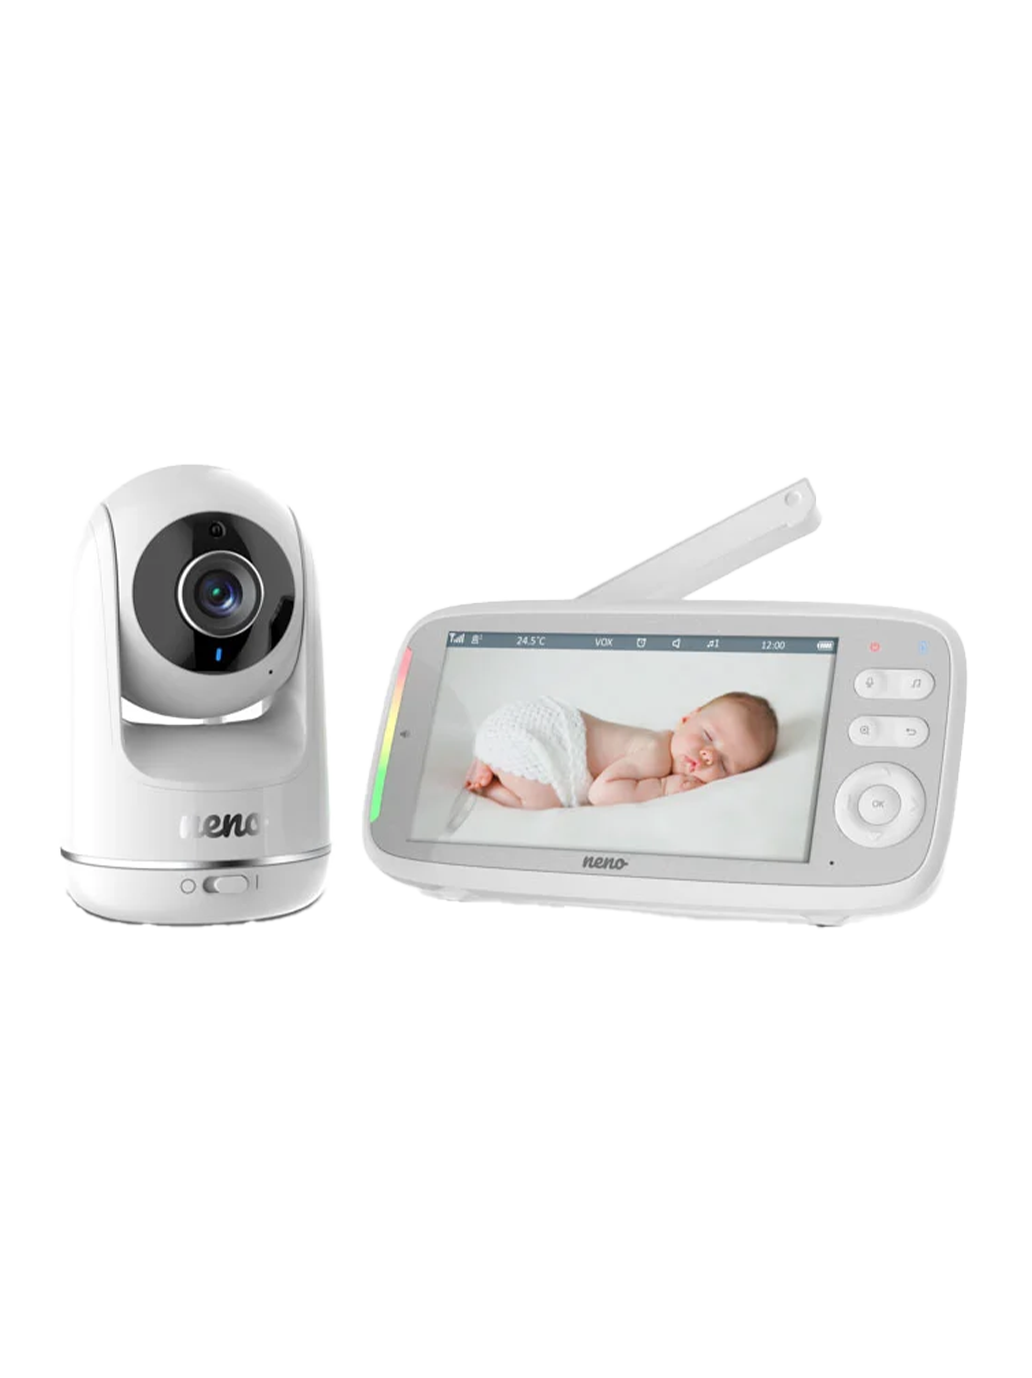 Neno Vista video baby monitor with a wireless receiver